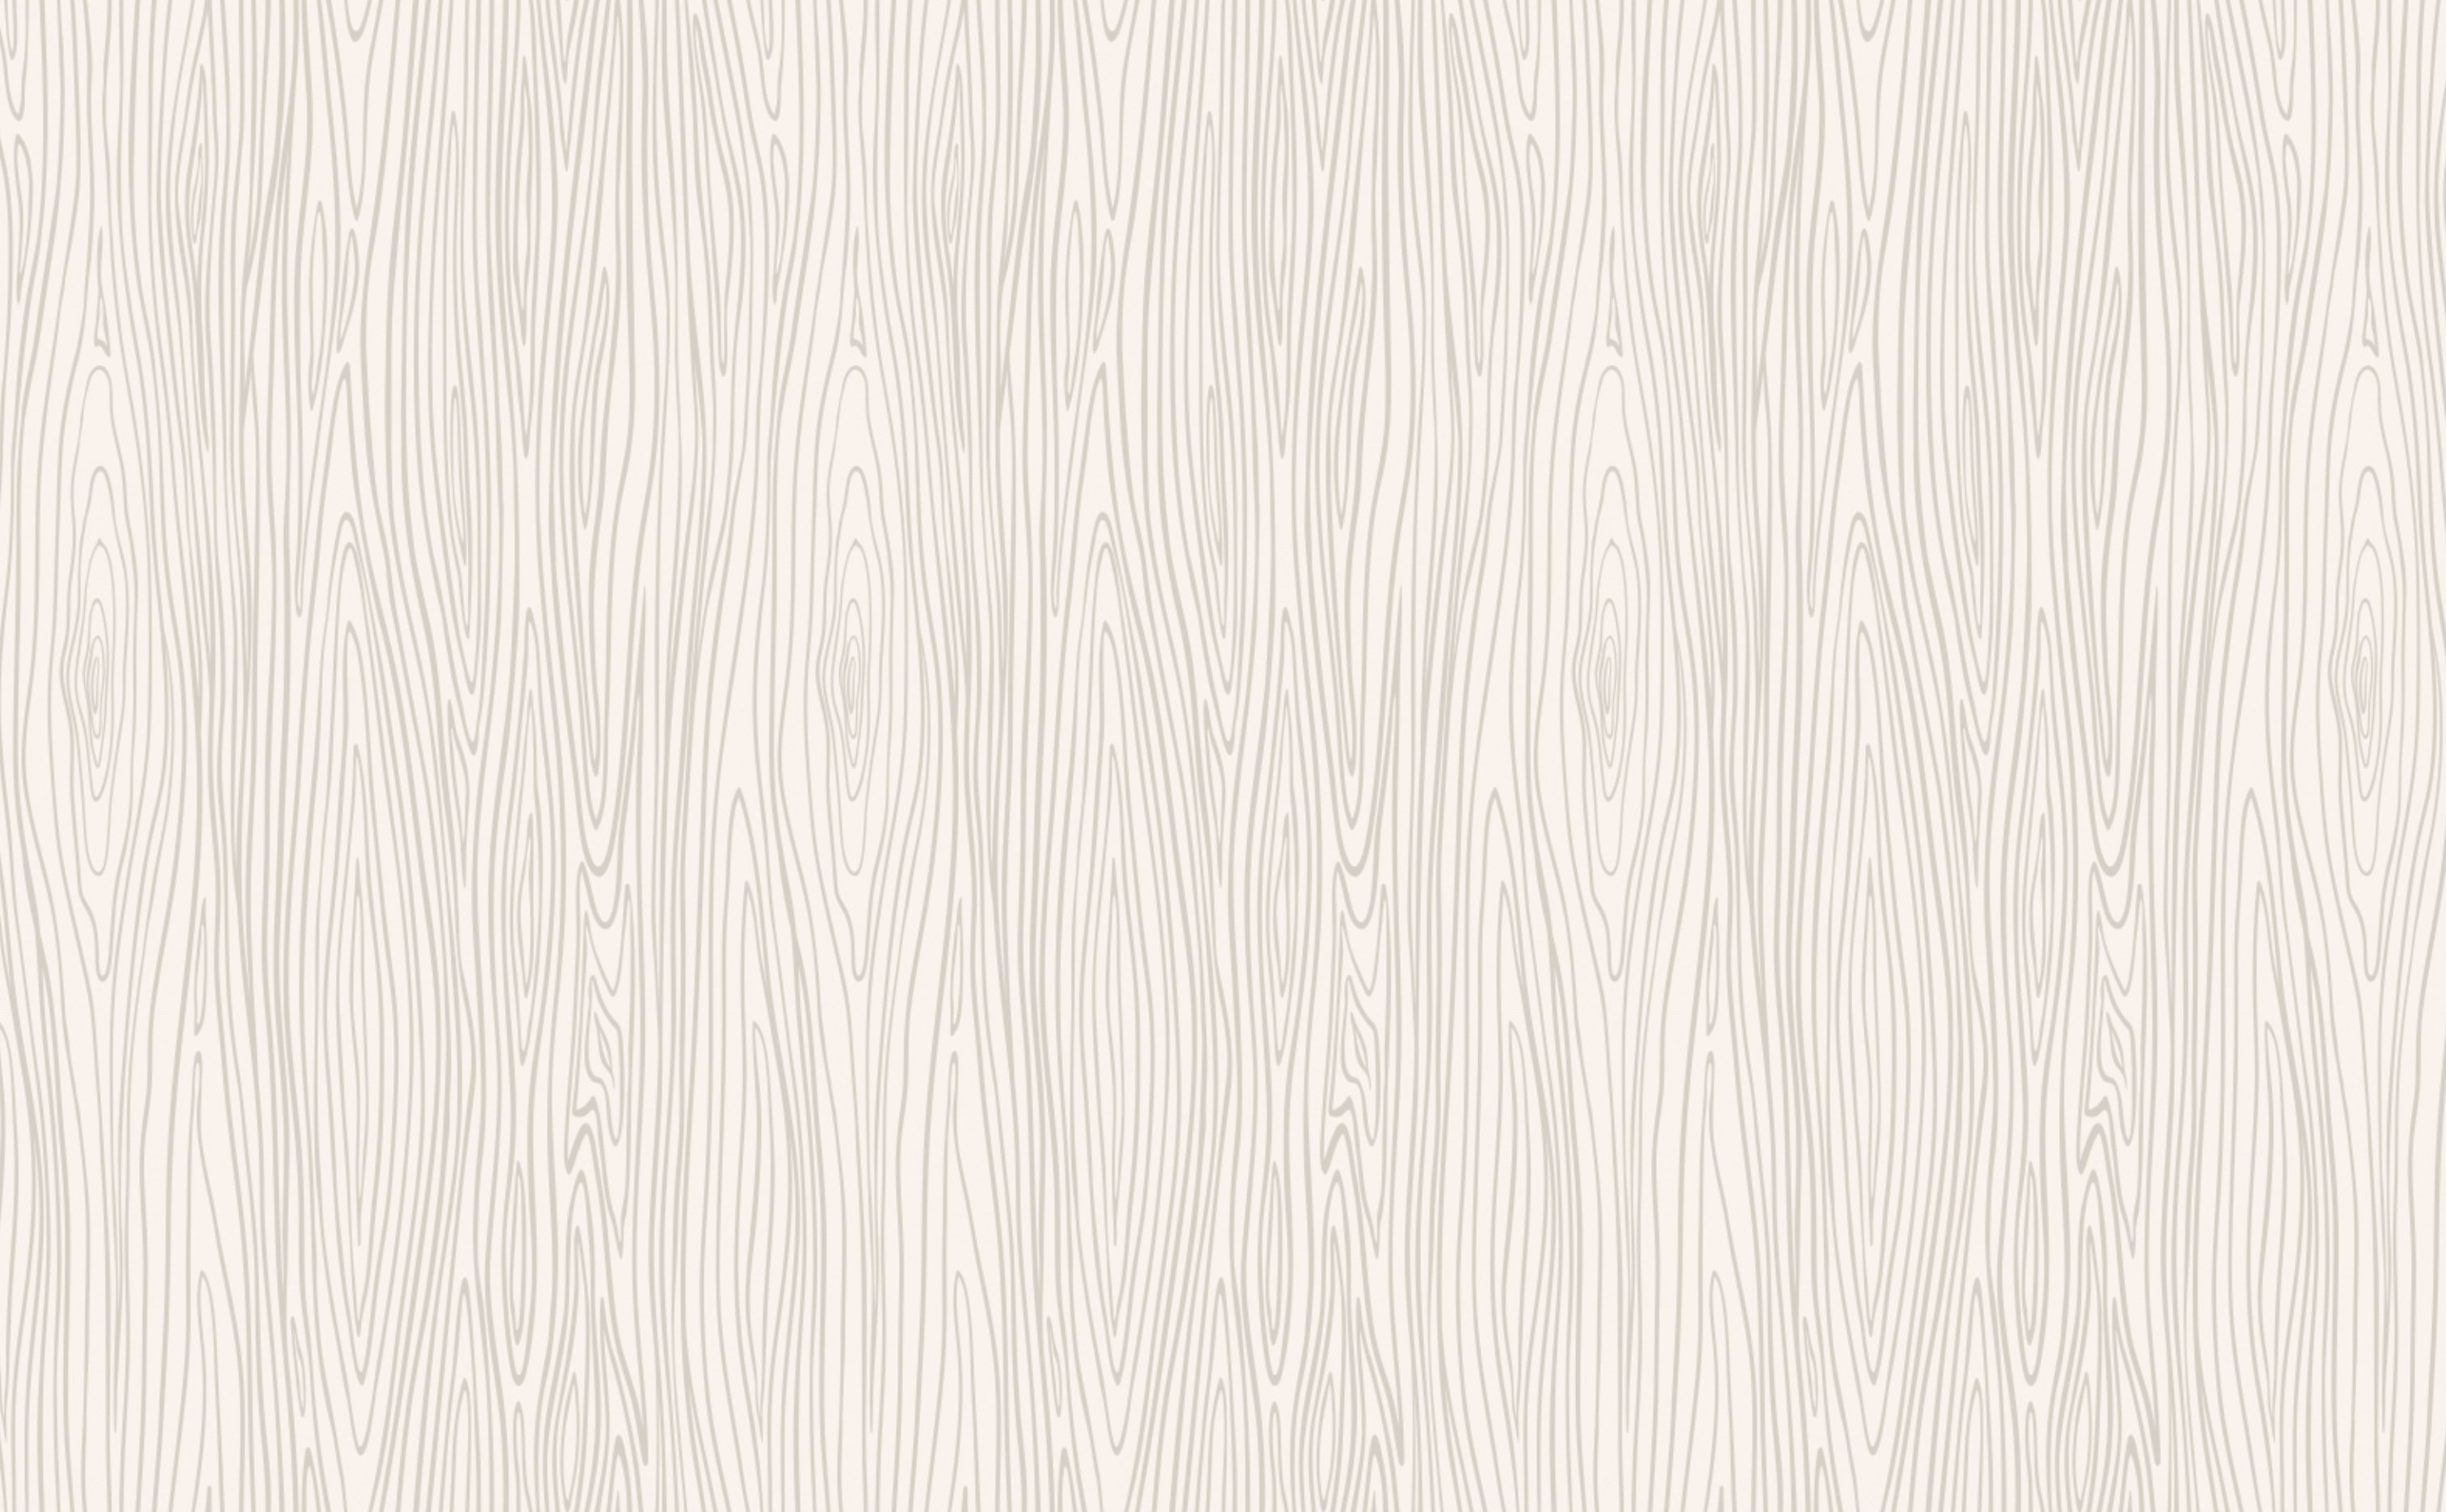 Faux White Wood Grain Wallpaper by Walls Need Love